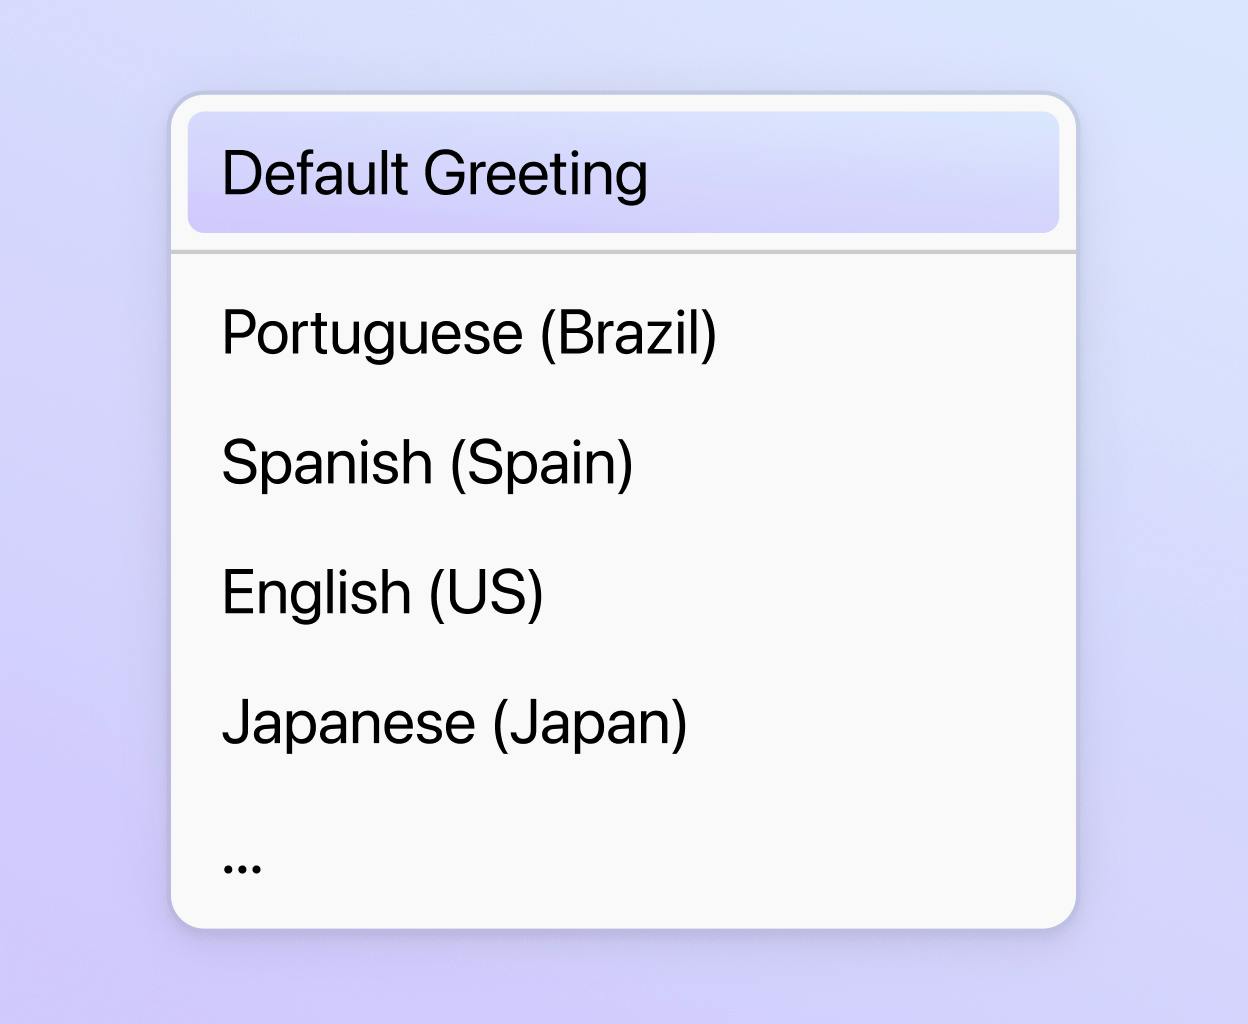 Multilingual greetings